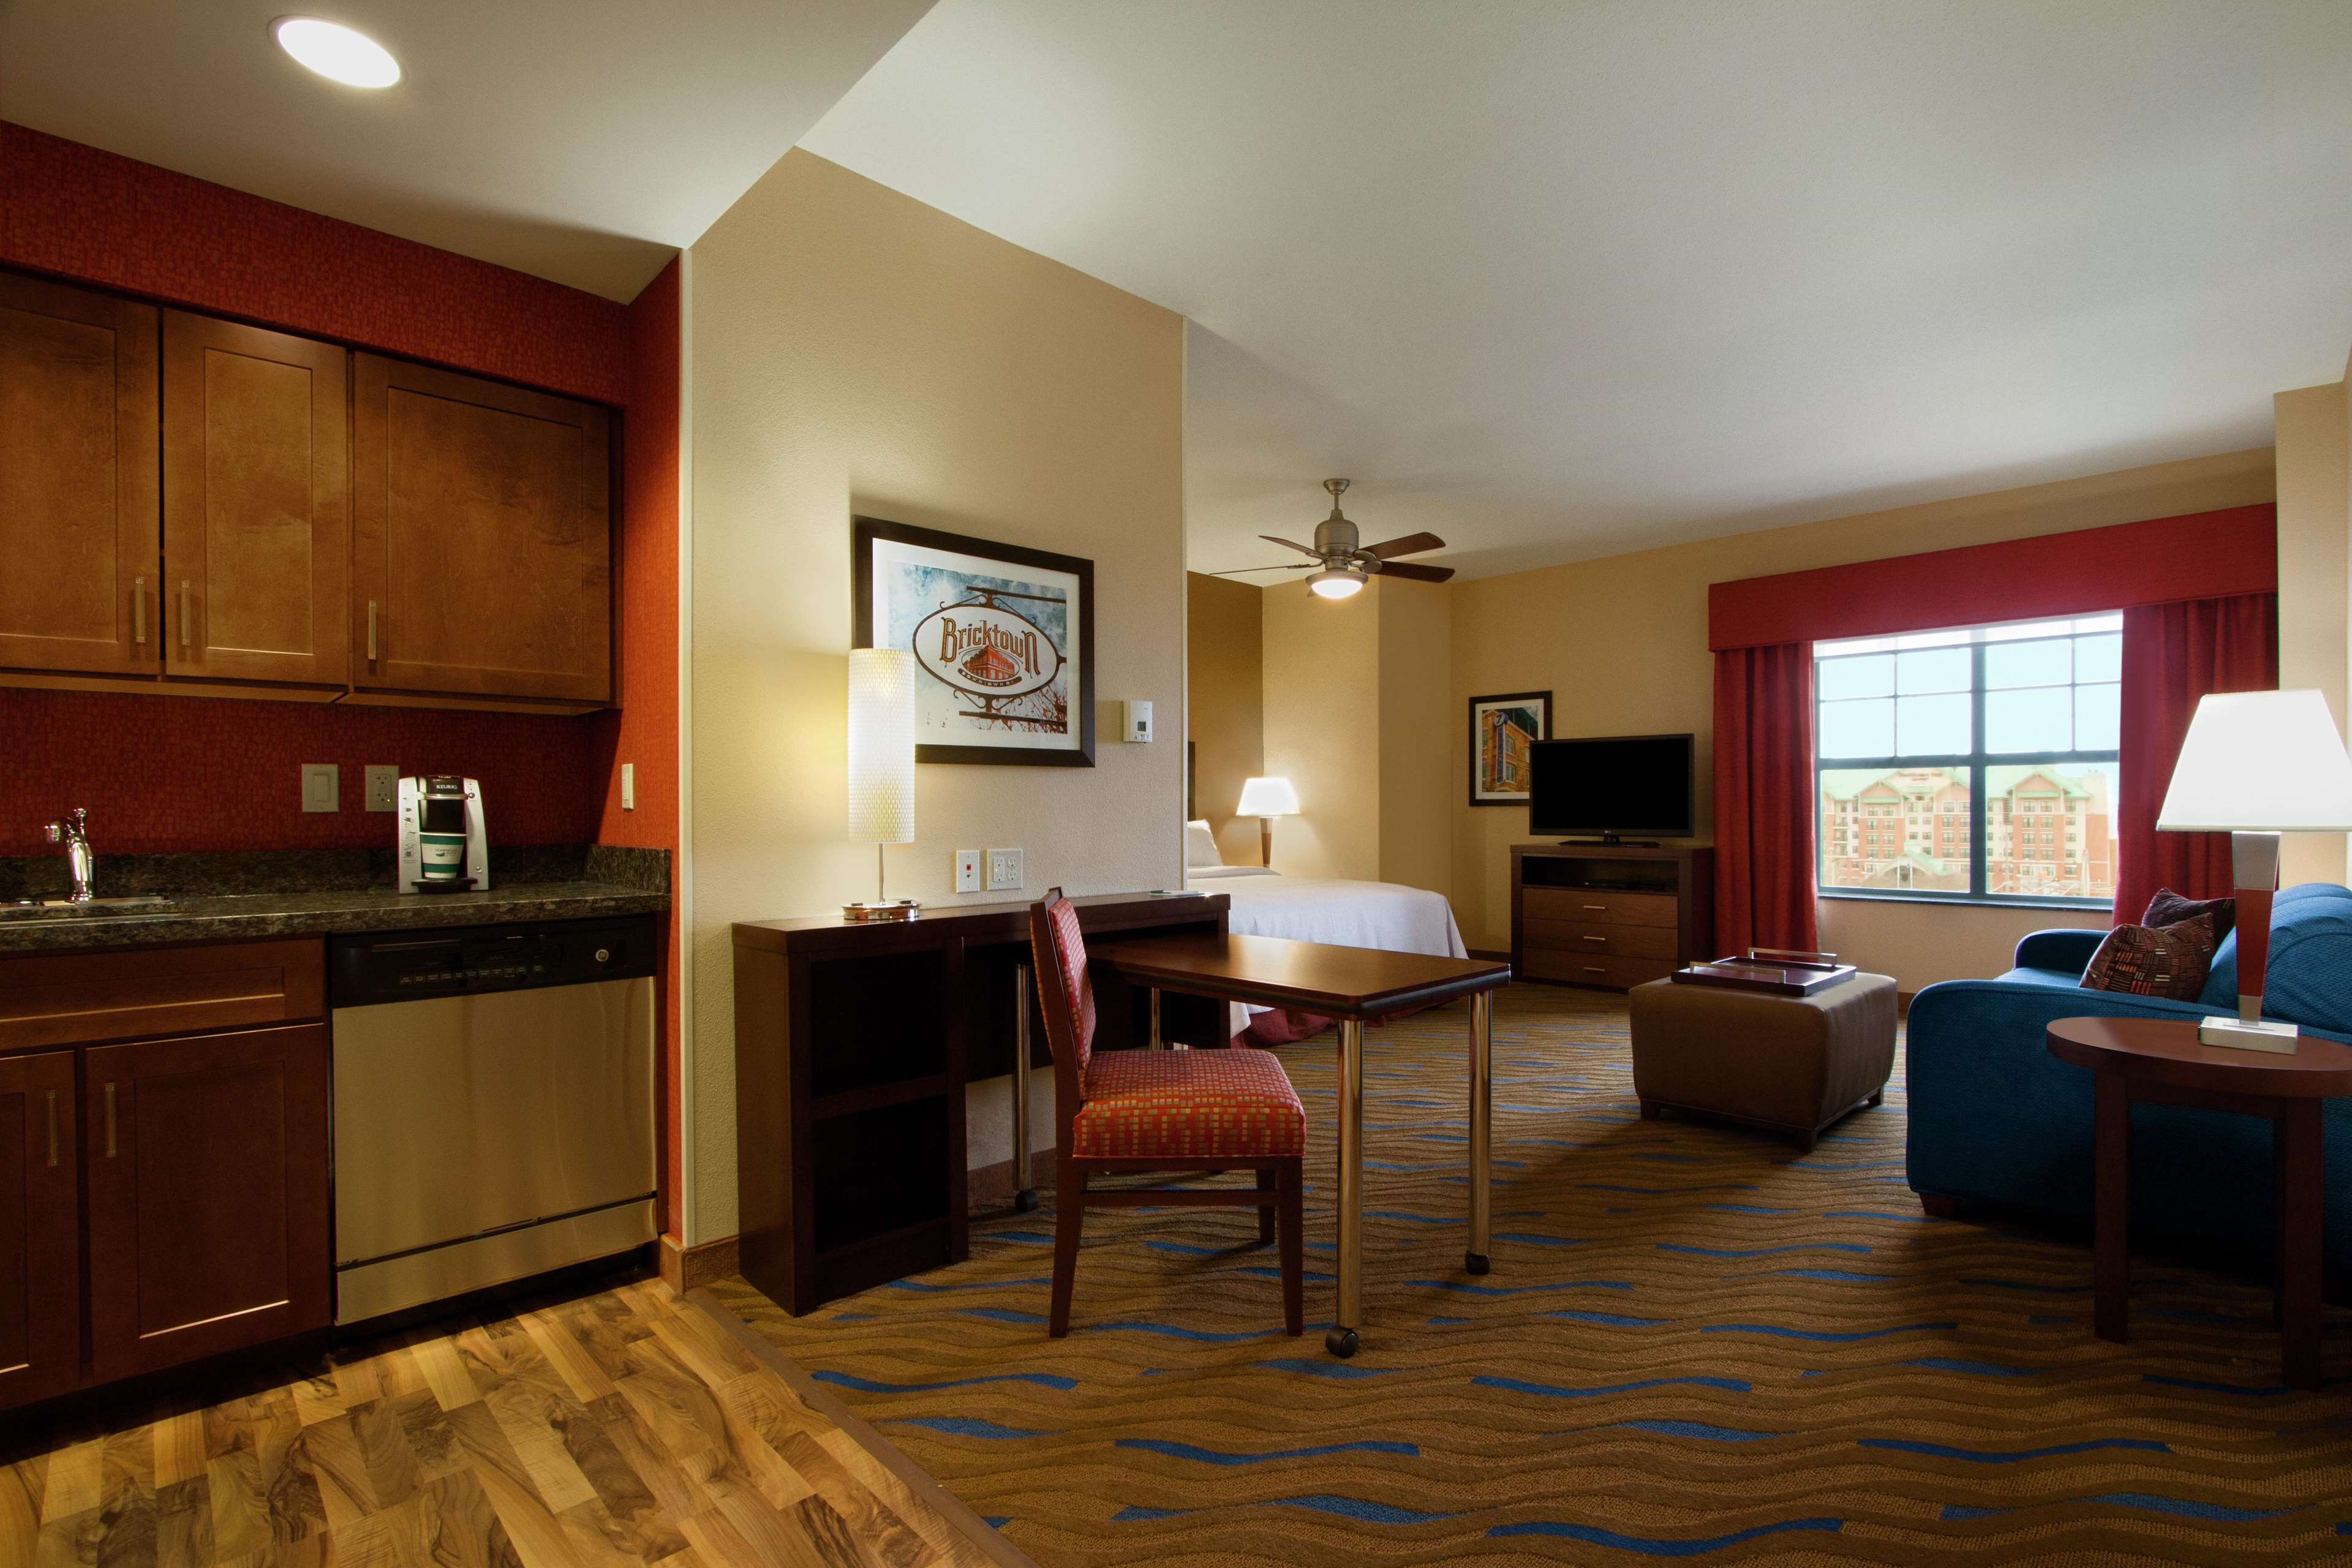 Homewood Suites by Hilton Oklahoma City-Bricktown, OK Photo